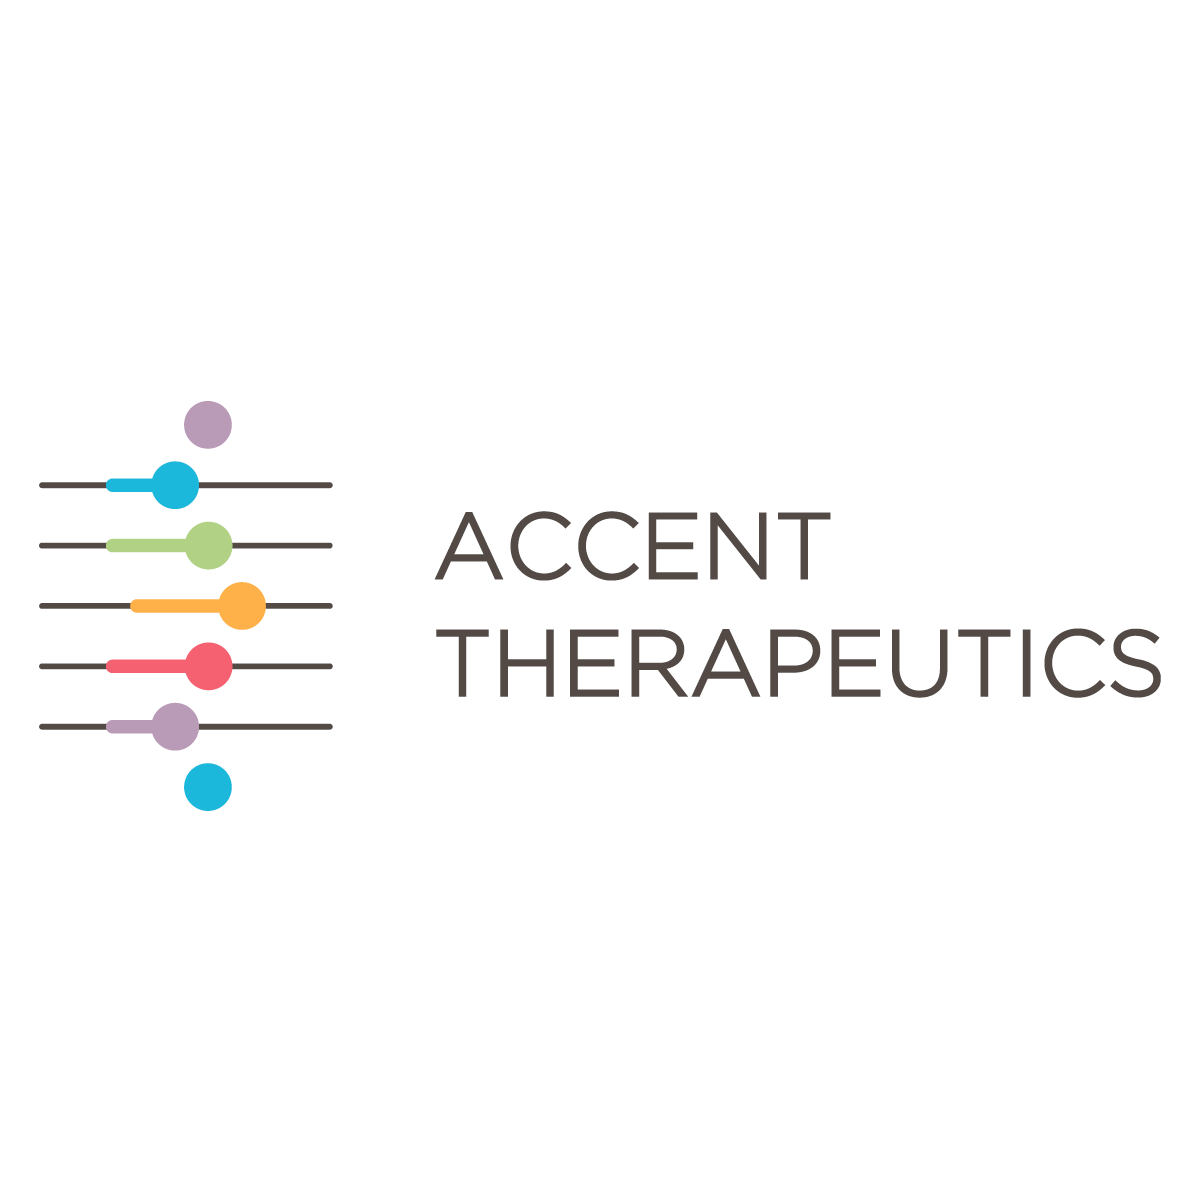 Accent Therapeutics